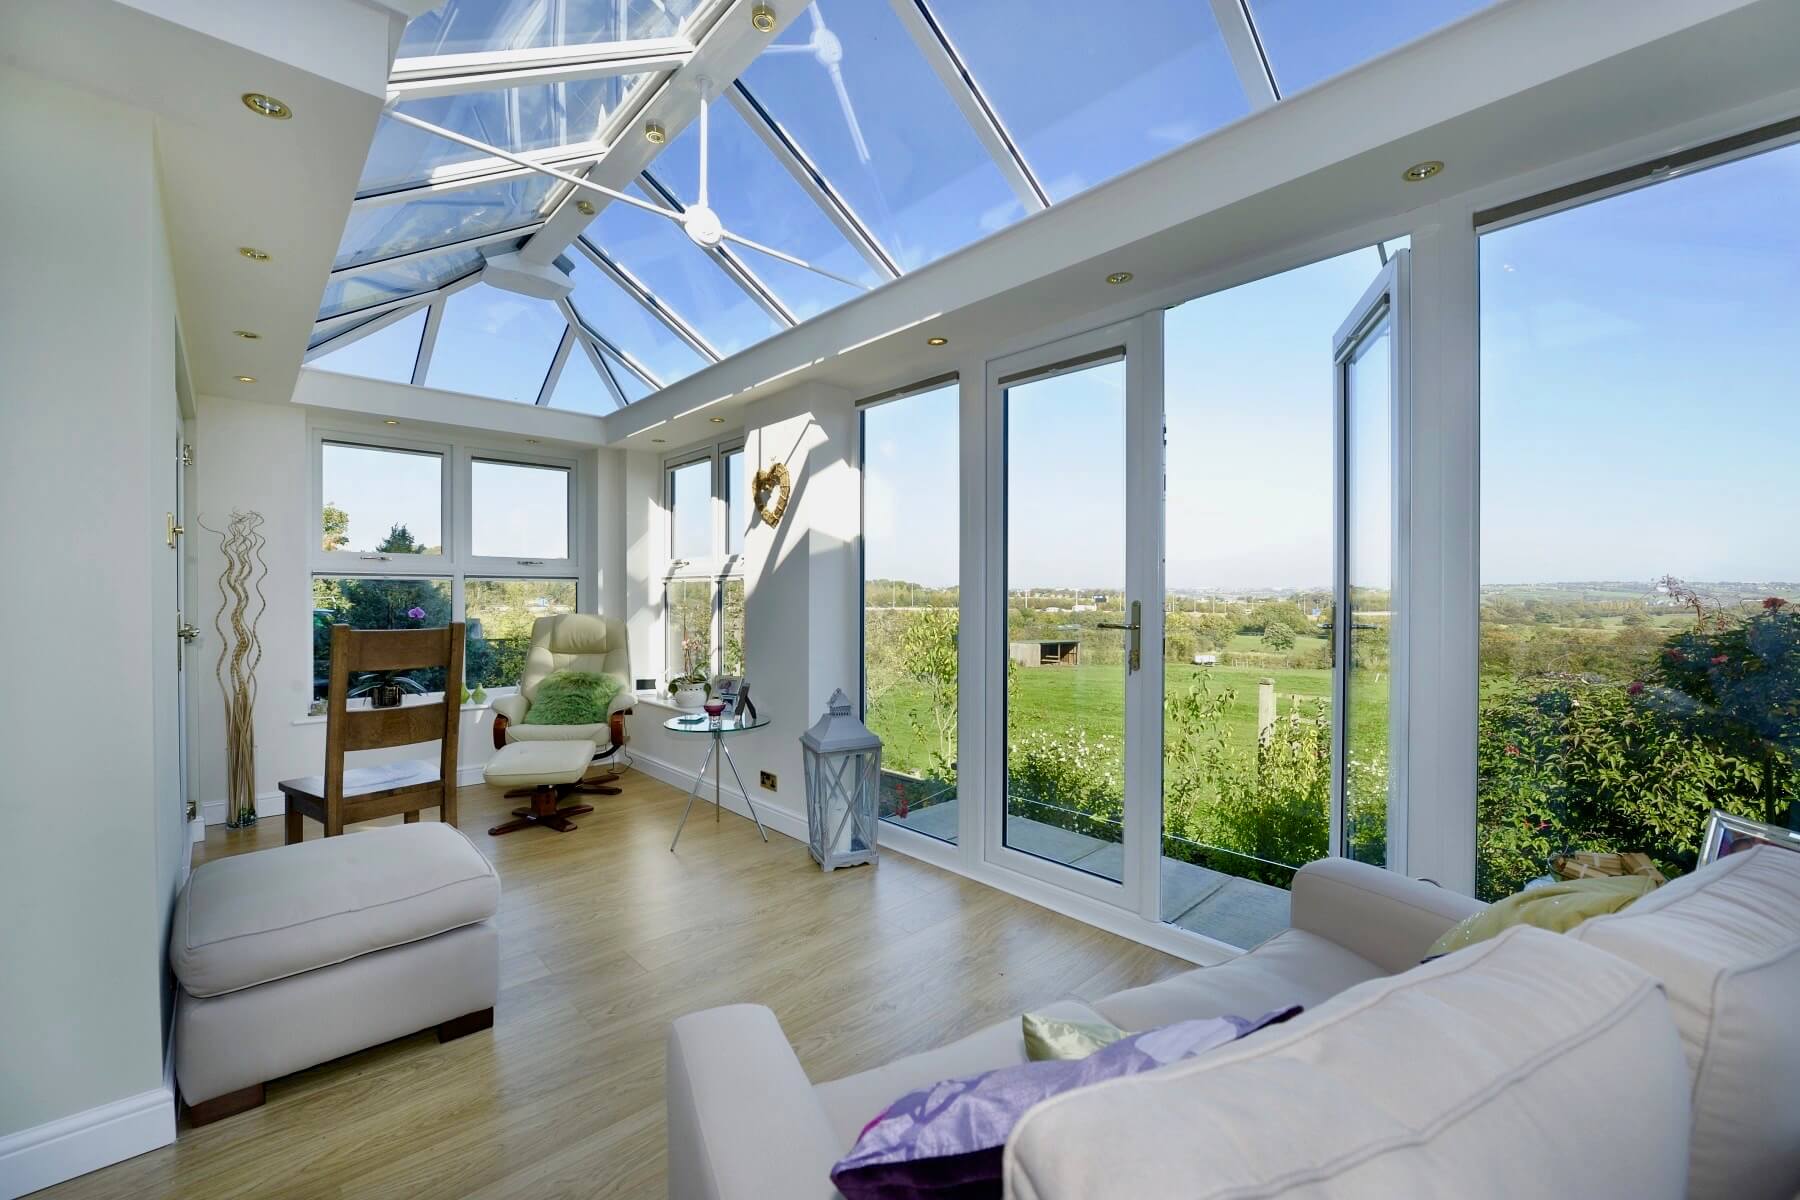 The New Hampton Room – A Unique Four Seasons Sunrooms Concept